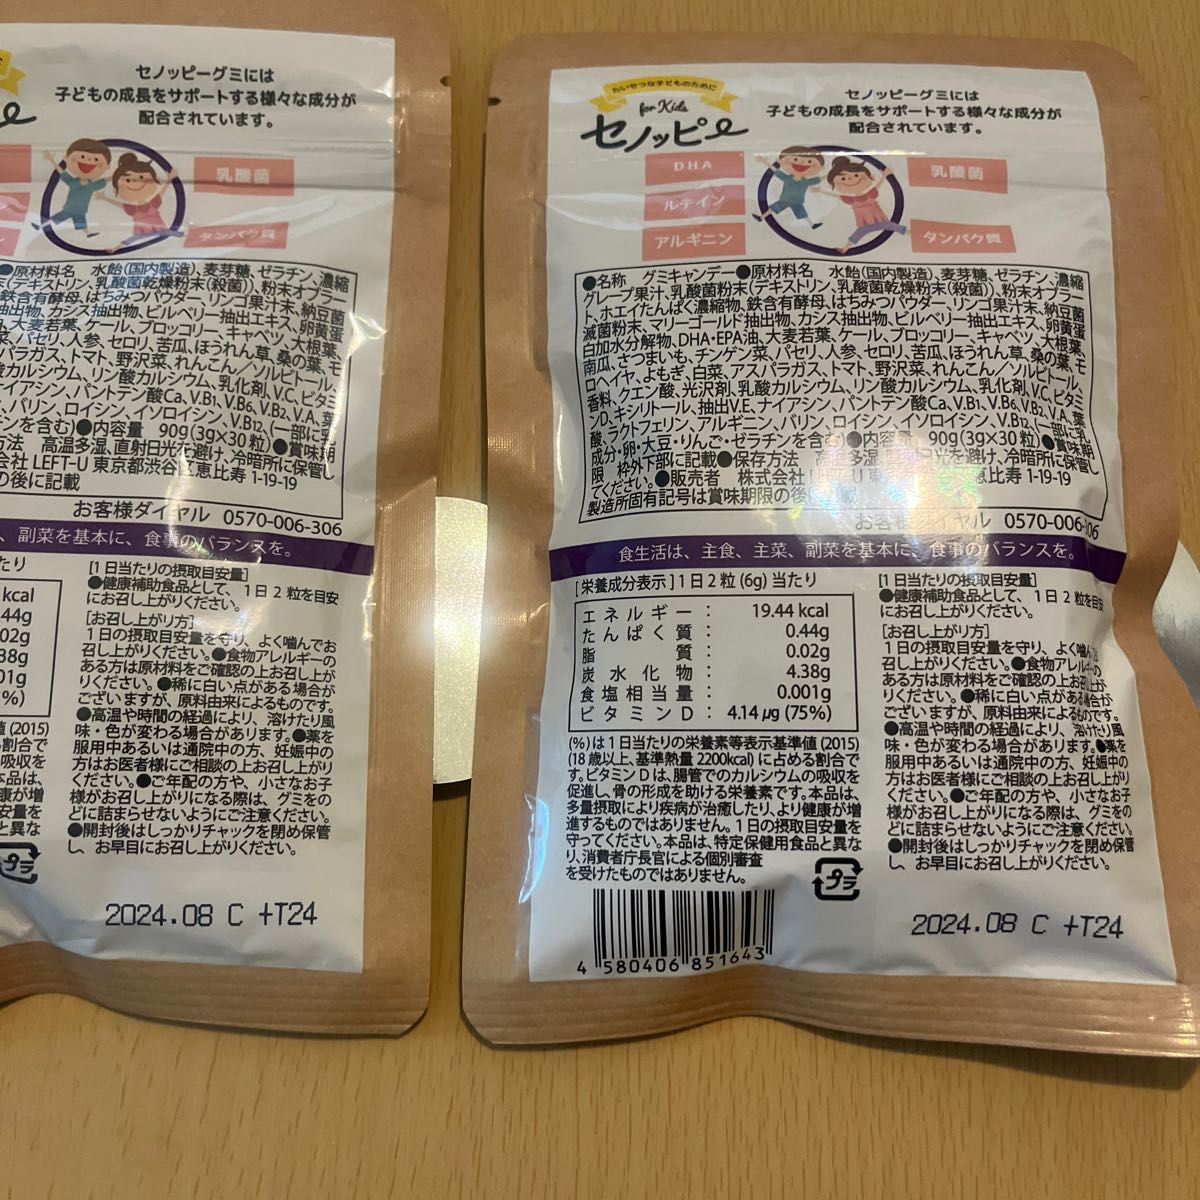 www.haoming.jp - 2袋 新品 セノッピー ブドウ味 90g 賞味期限2024.08